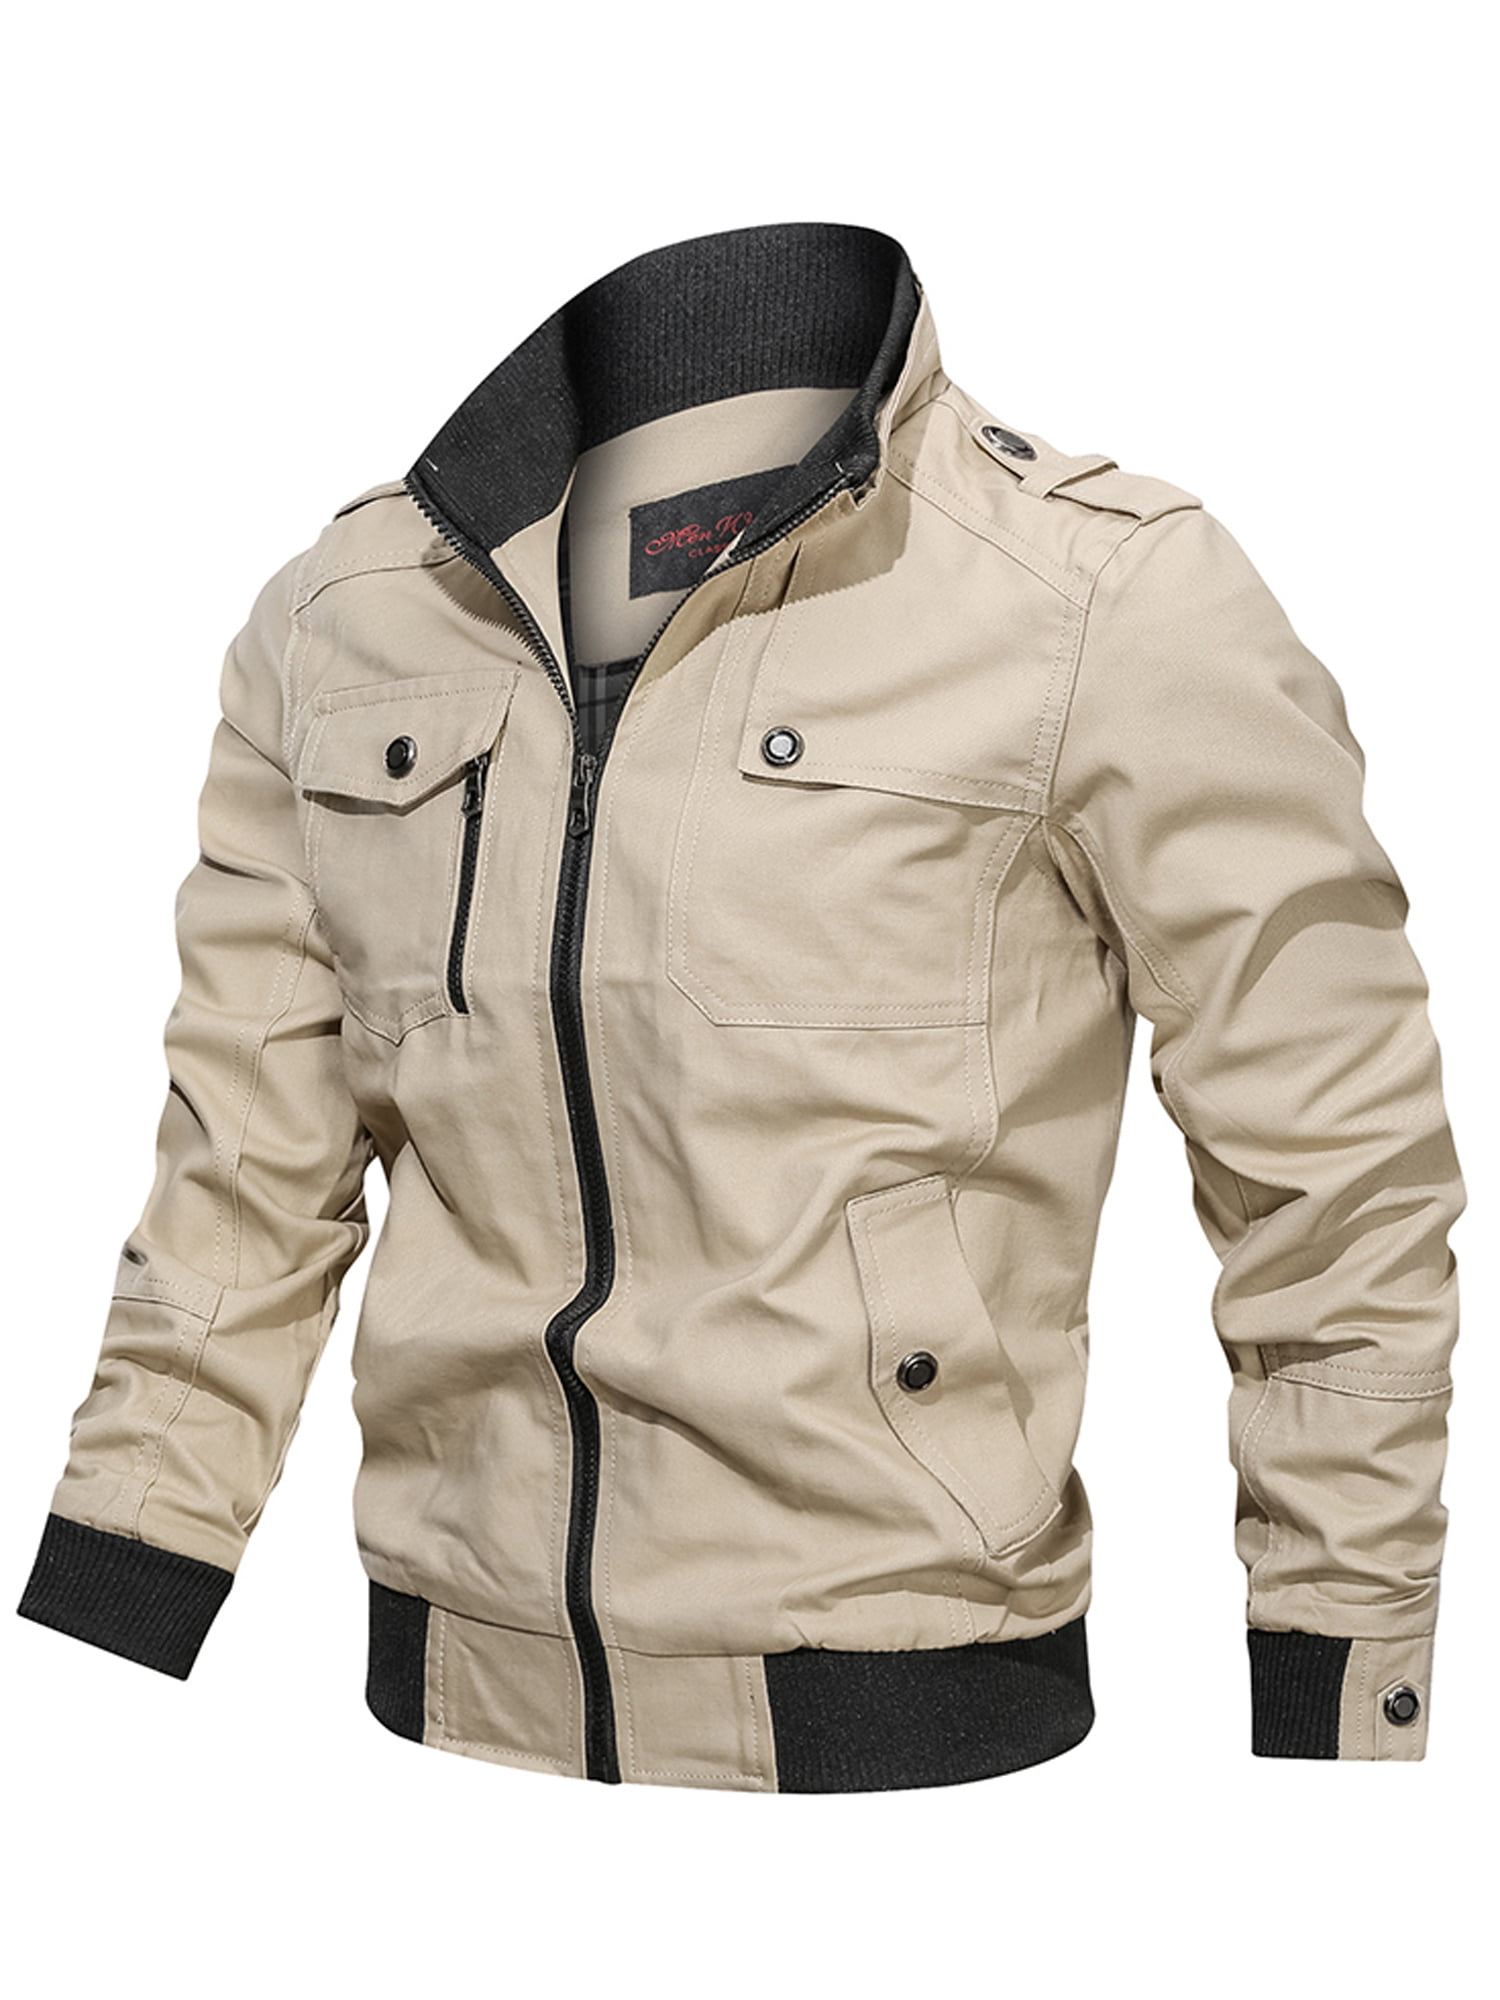 Details about   Men's Military cotton jackets casual collar bomber jacket coat parkas outwear## 